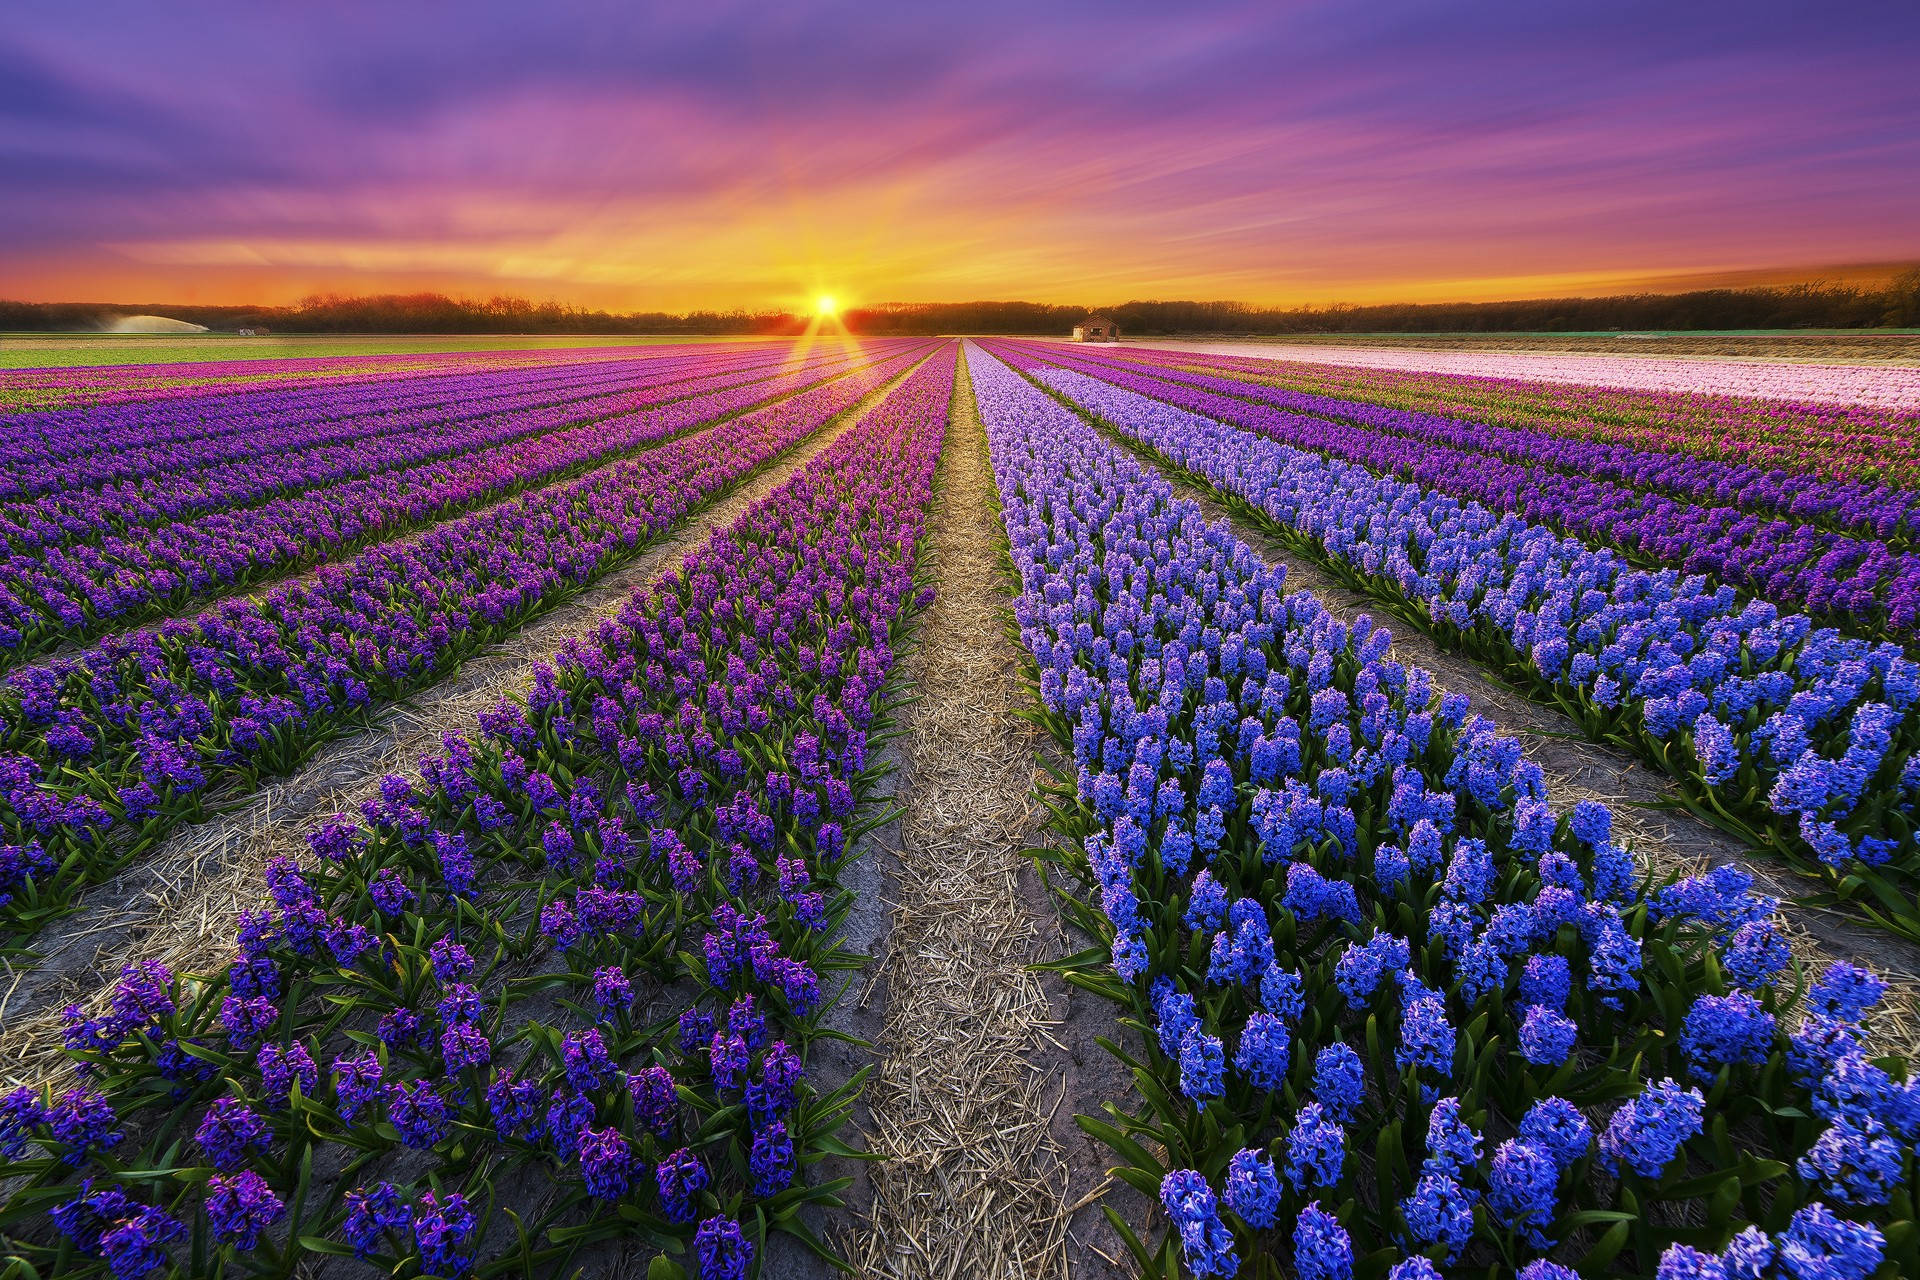 Hyacinth Background